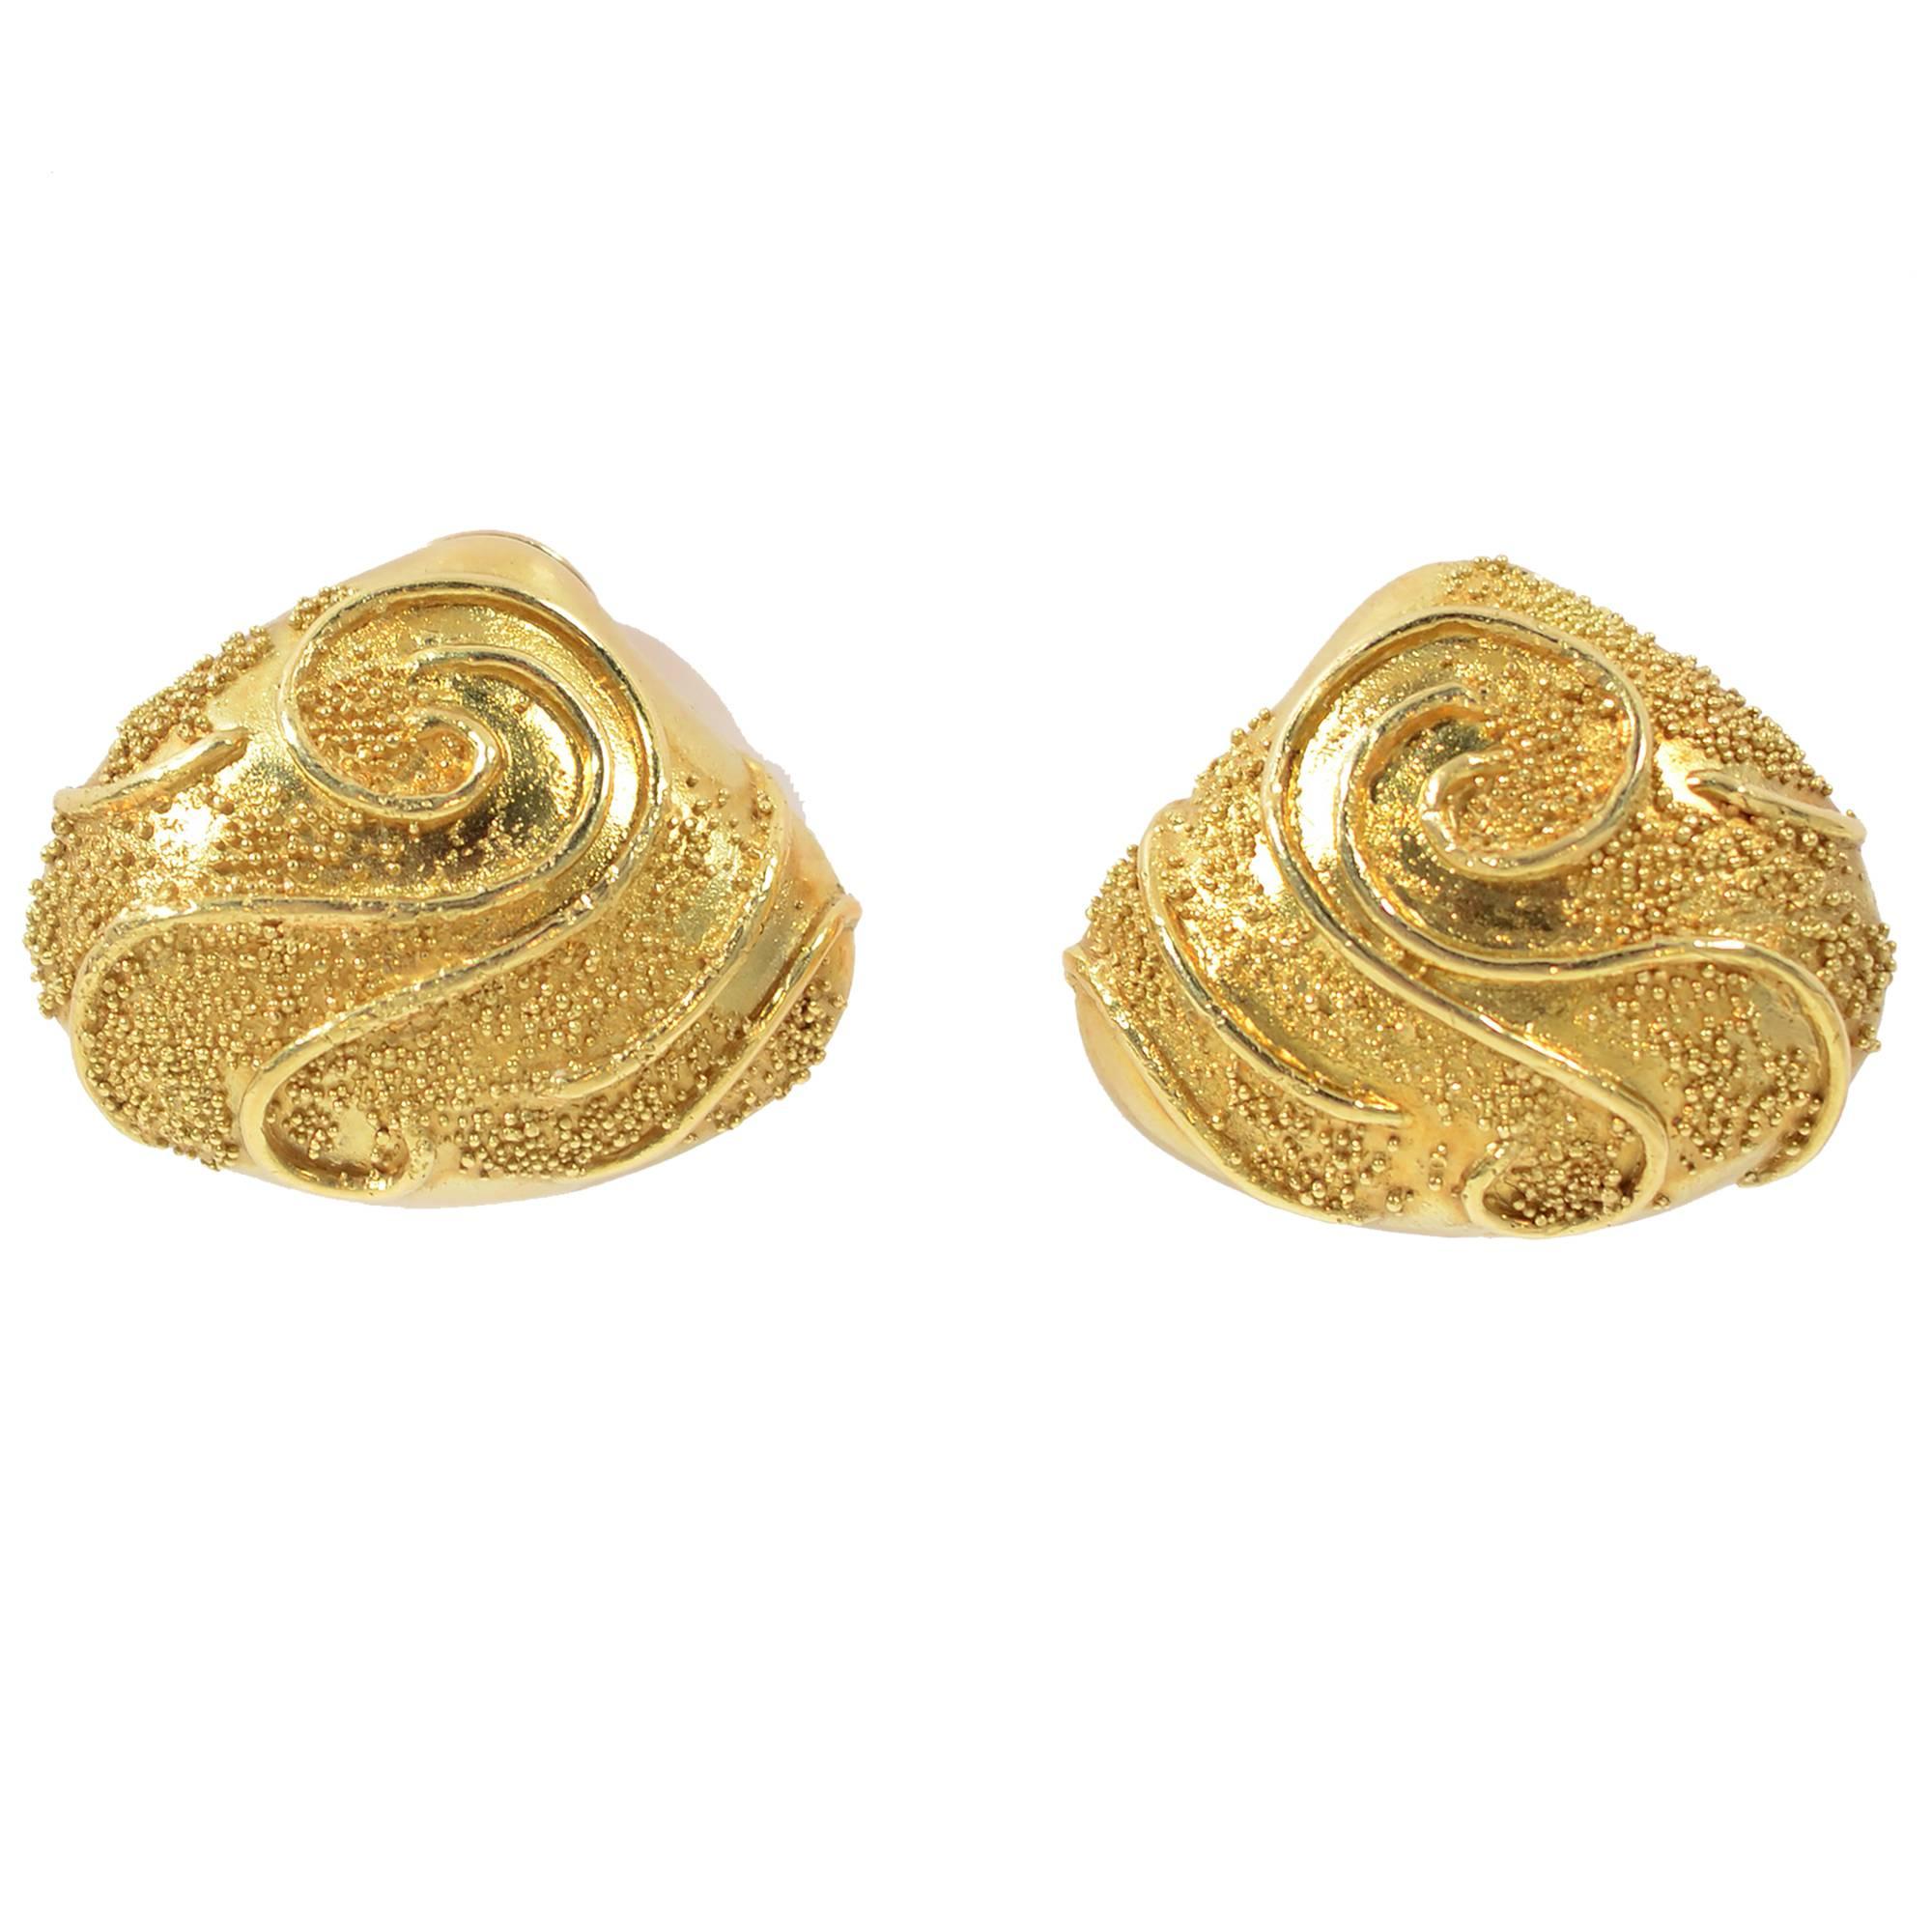 Elizabeth Gage Granulated Gold Earrings